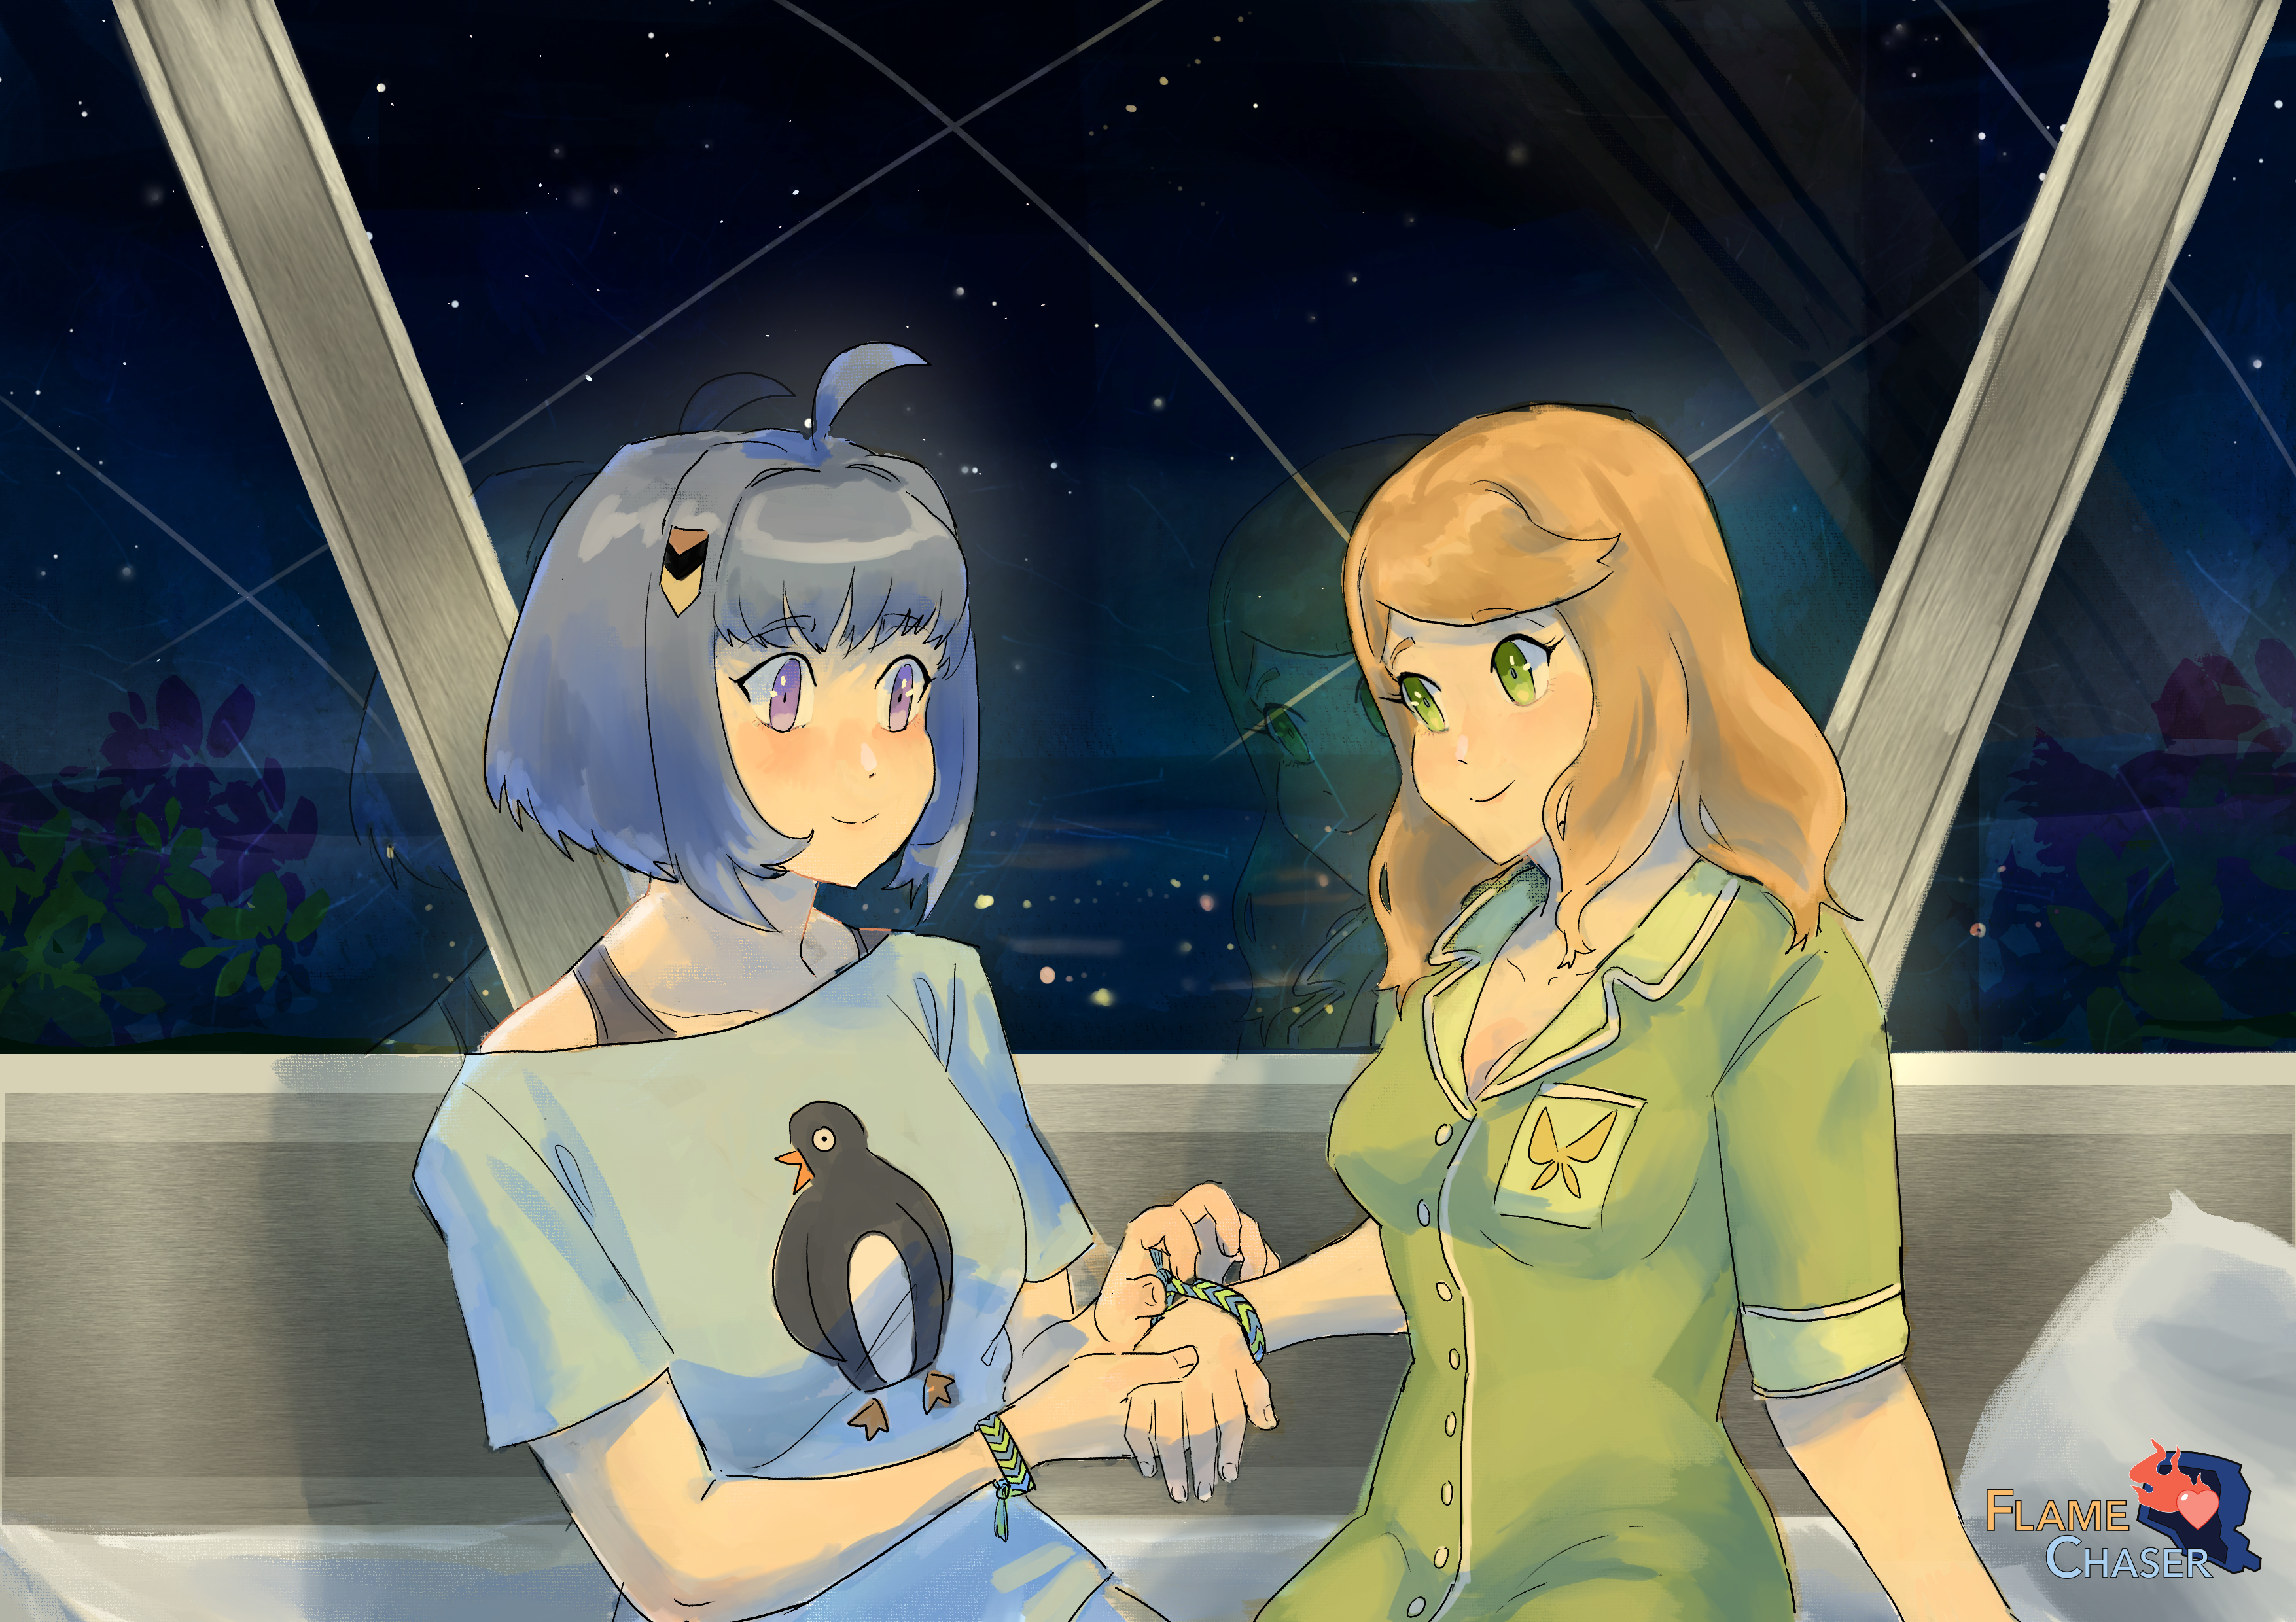 Game screenshot of Haneko and Karahara exchanging friendship bracelets